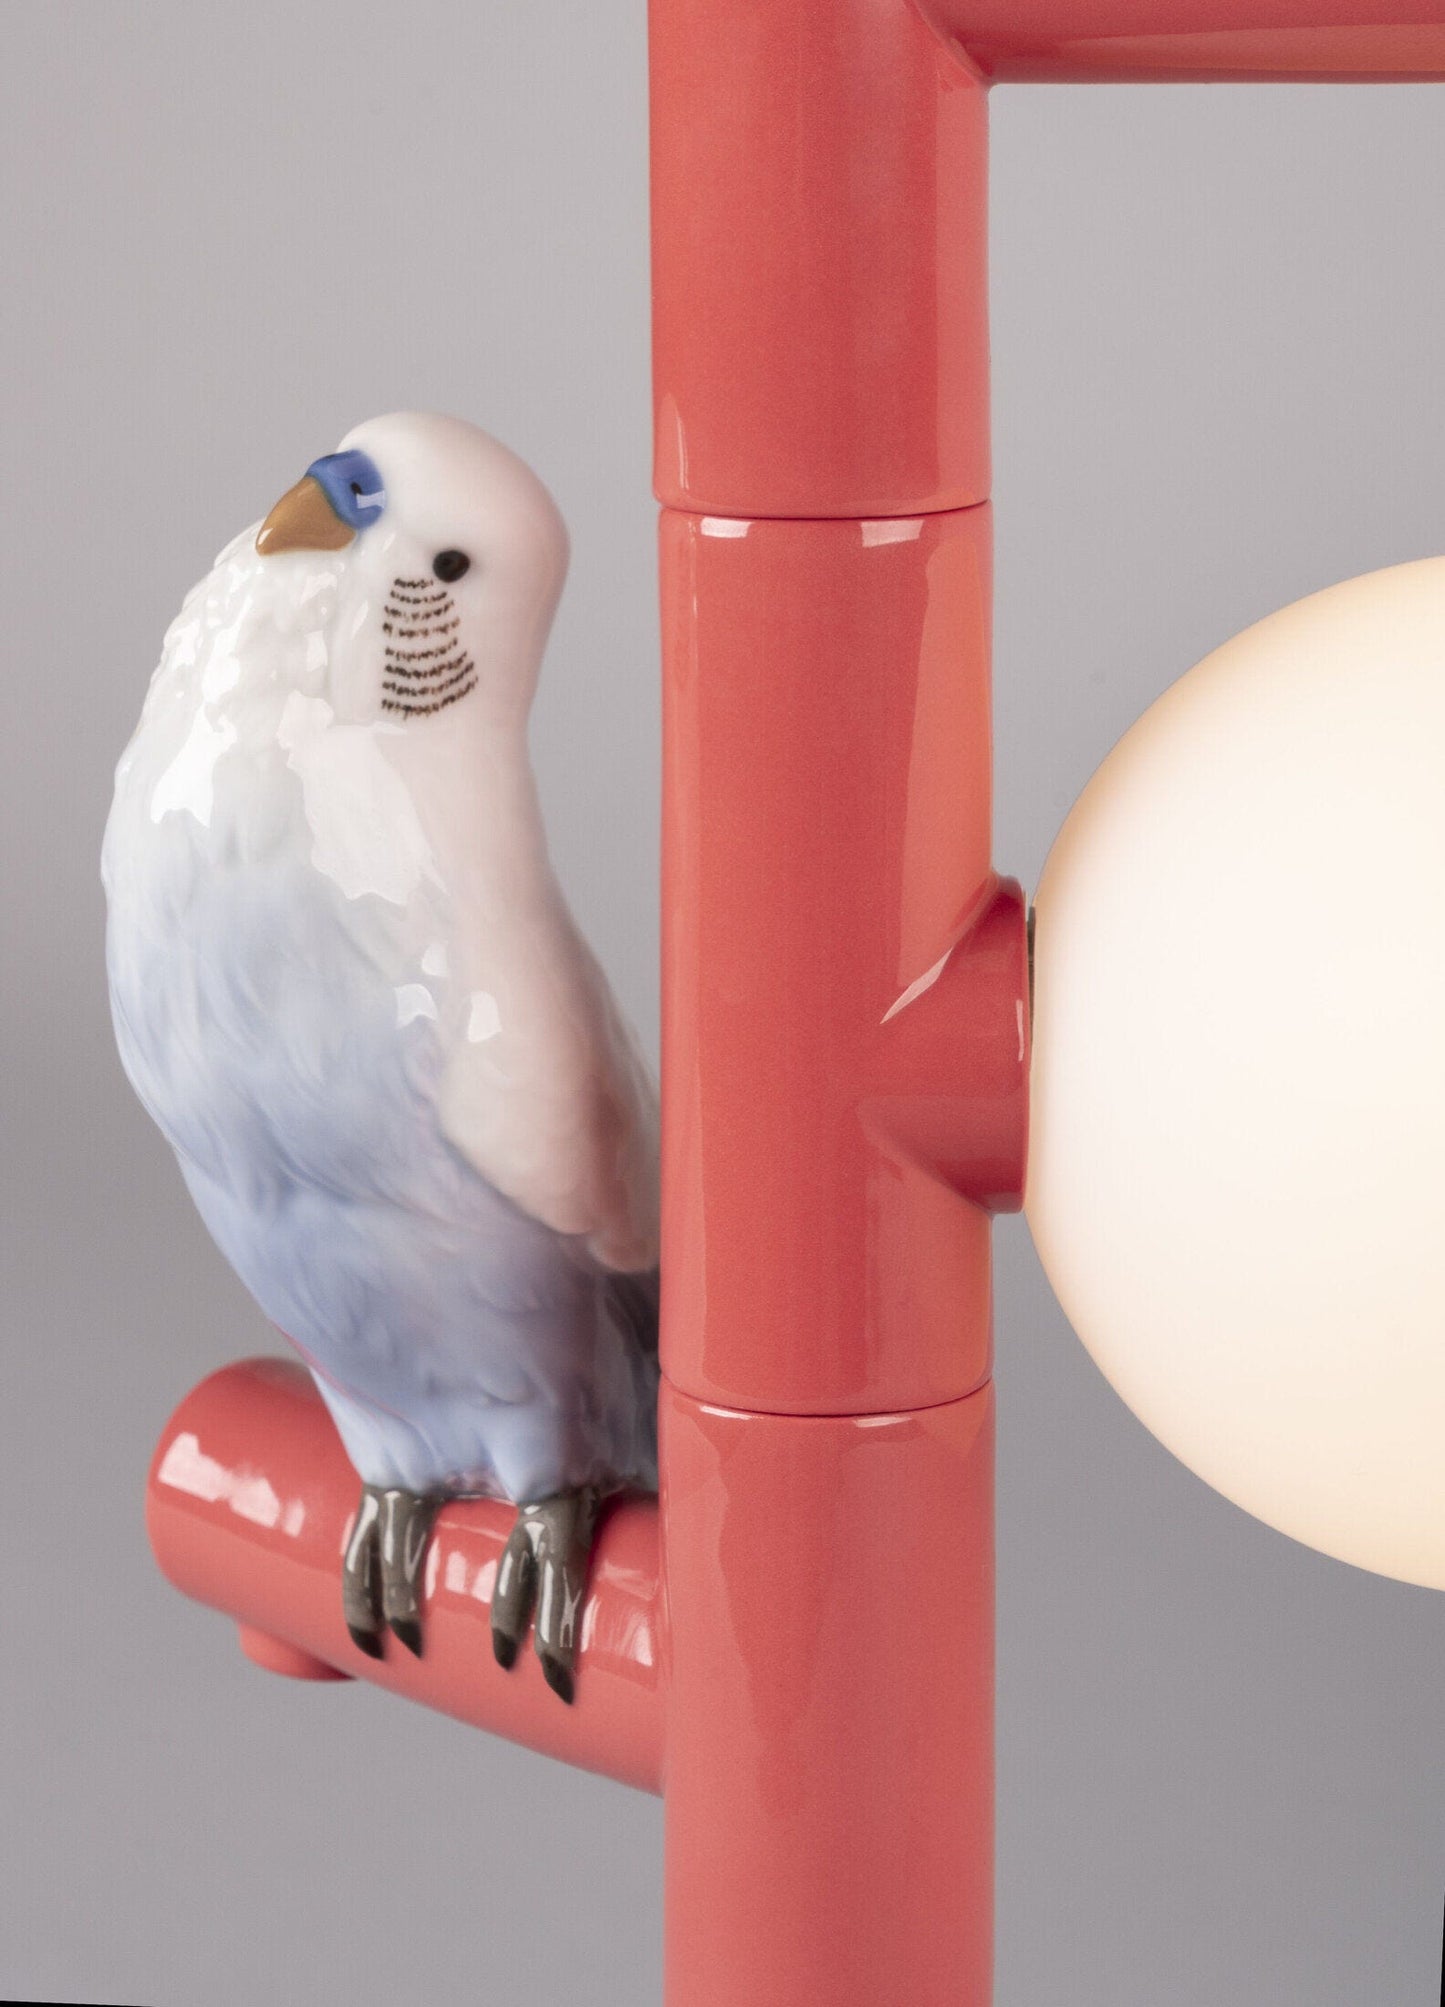 Parrot Party Table Lamp - FormFluent